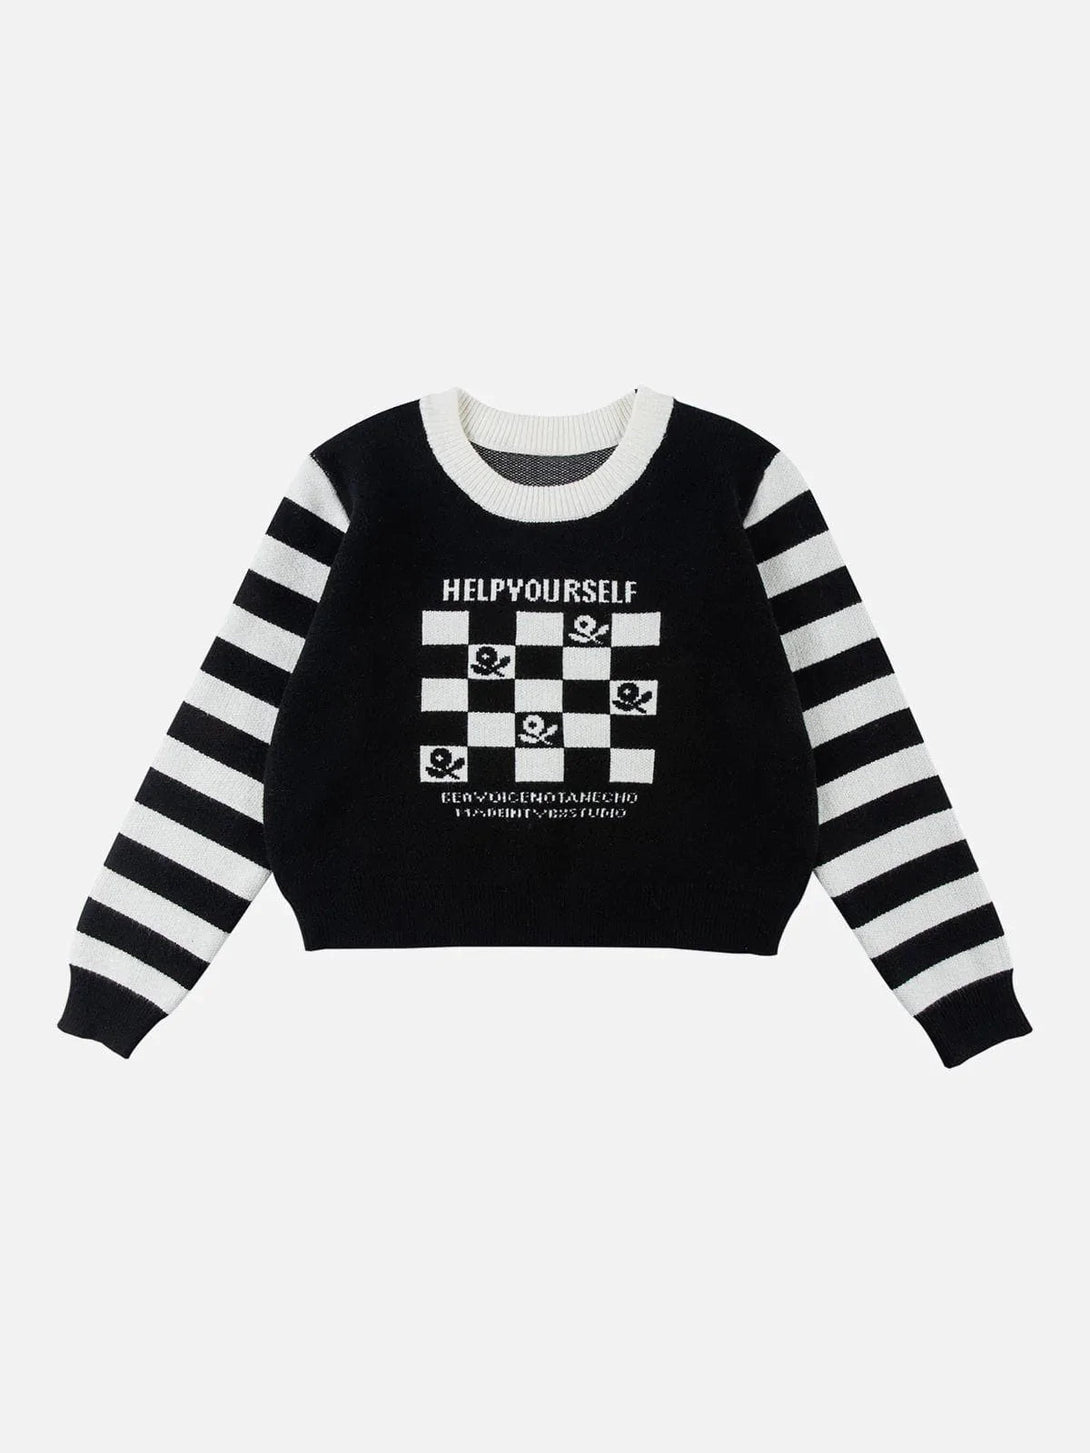 Majesda® - Vintage PLAID Print Sweater outfit ideas streetwear fashion